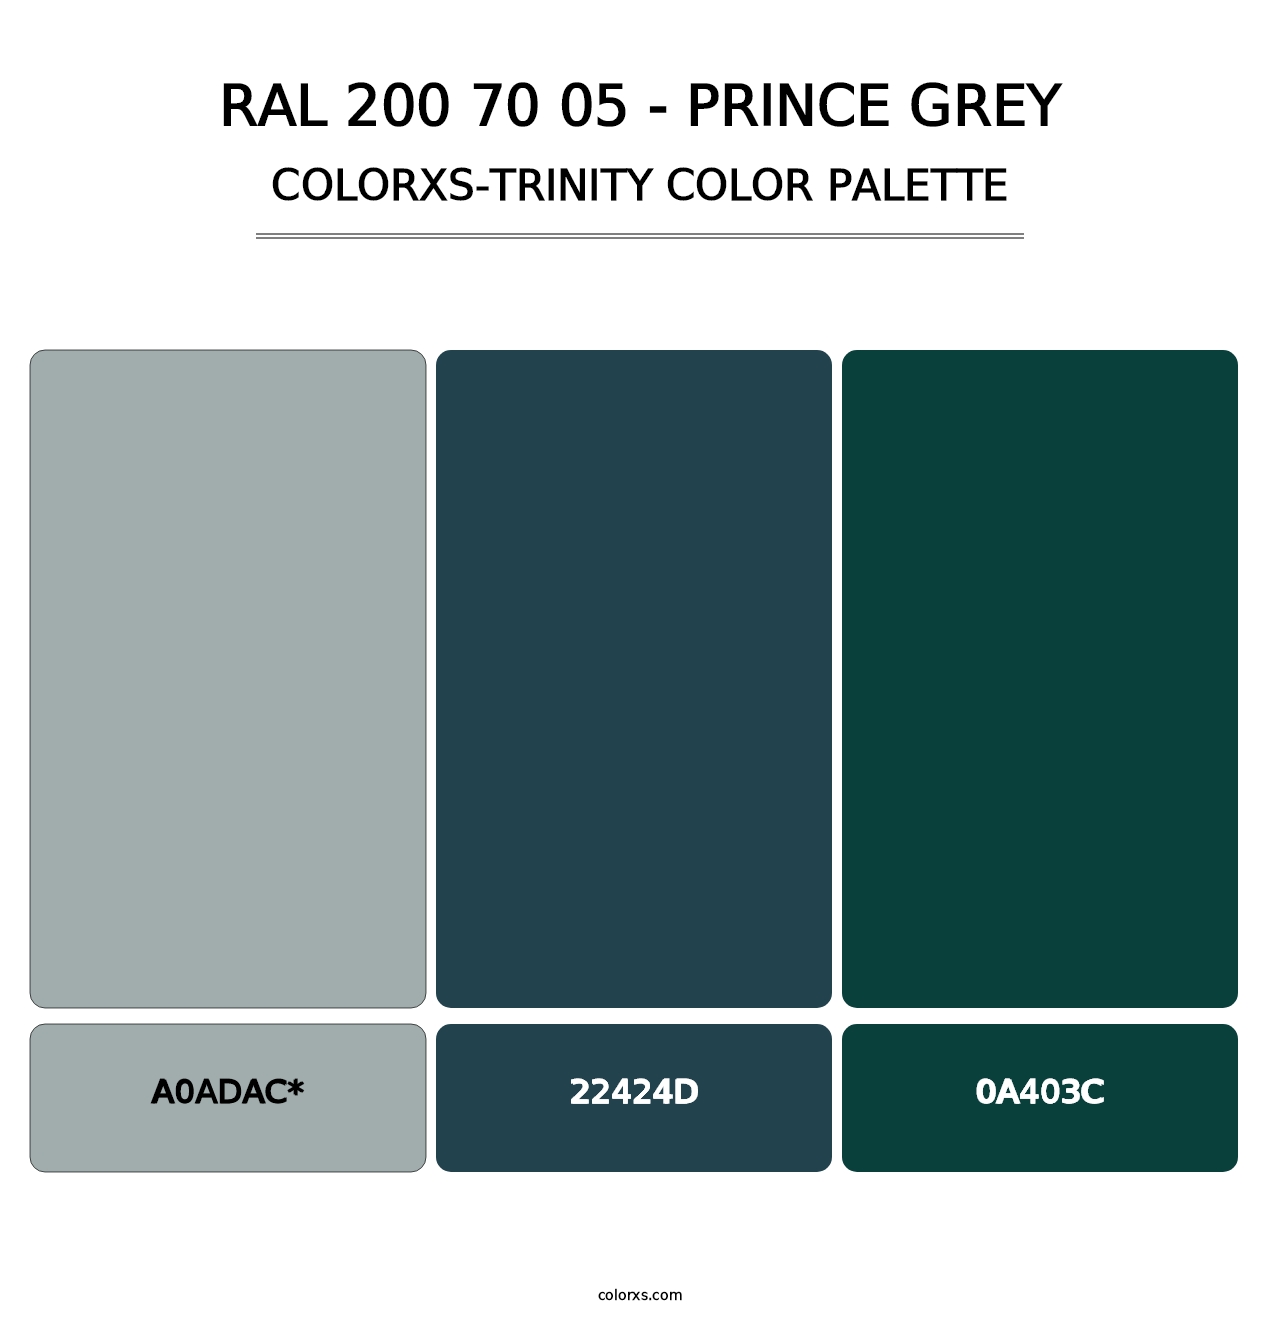 RAL 200 70 05 - Prince Grey - Colorxs Trinity Palette